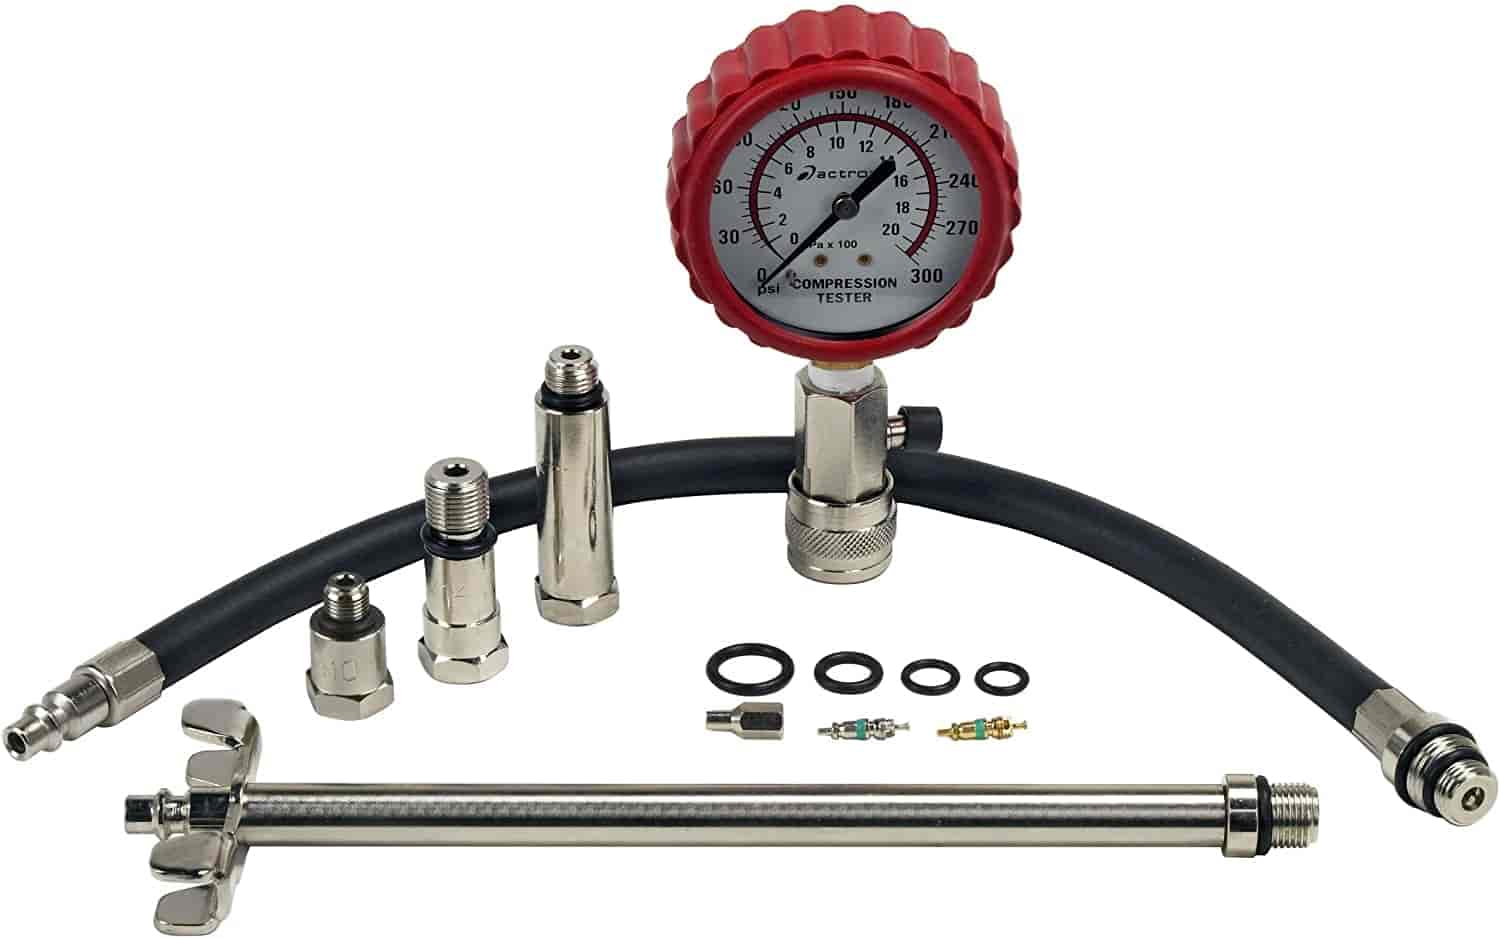 Professional Compression Tester 17" high pressure flexible hose